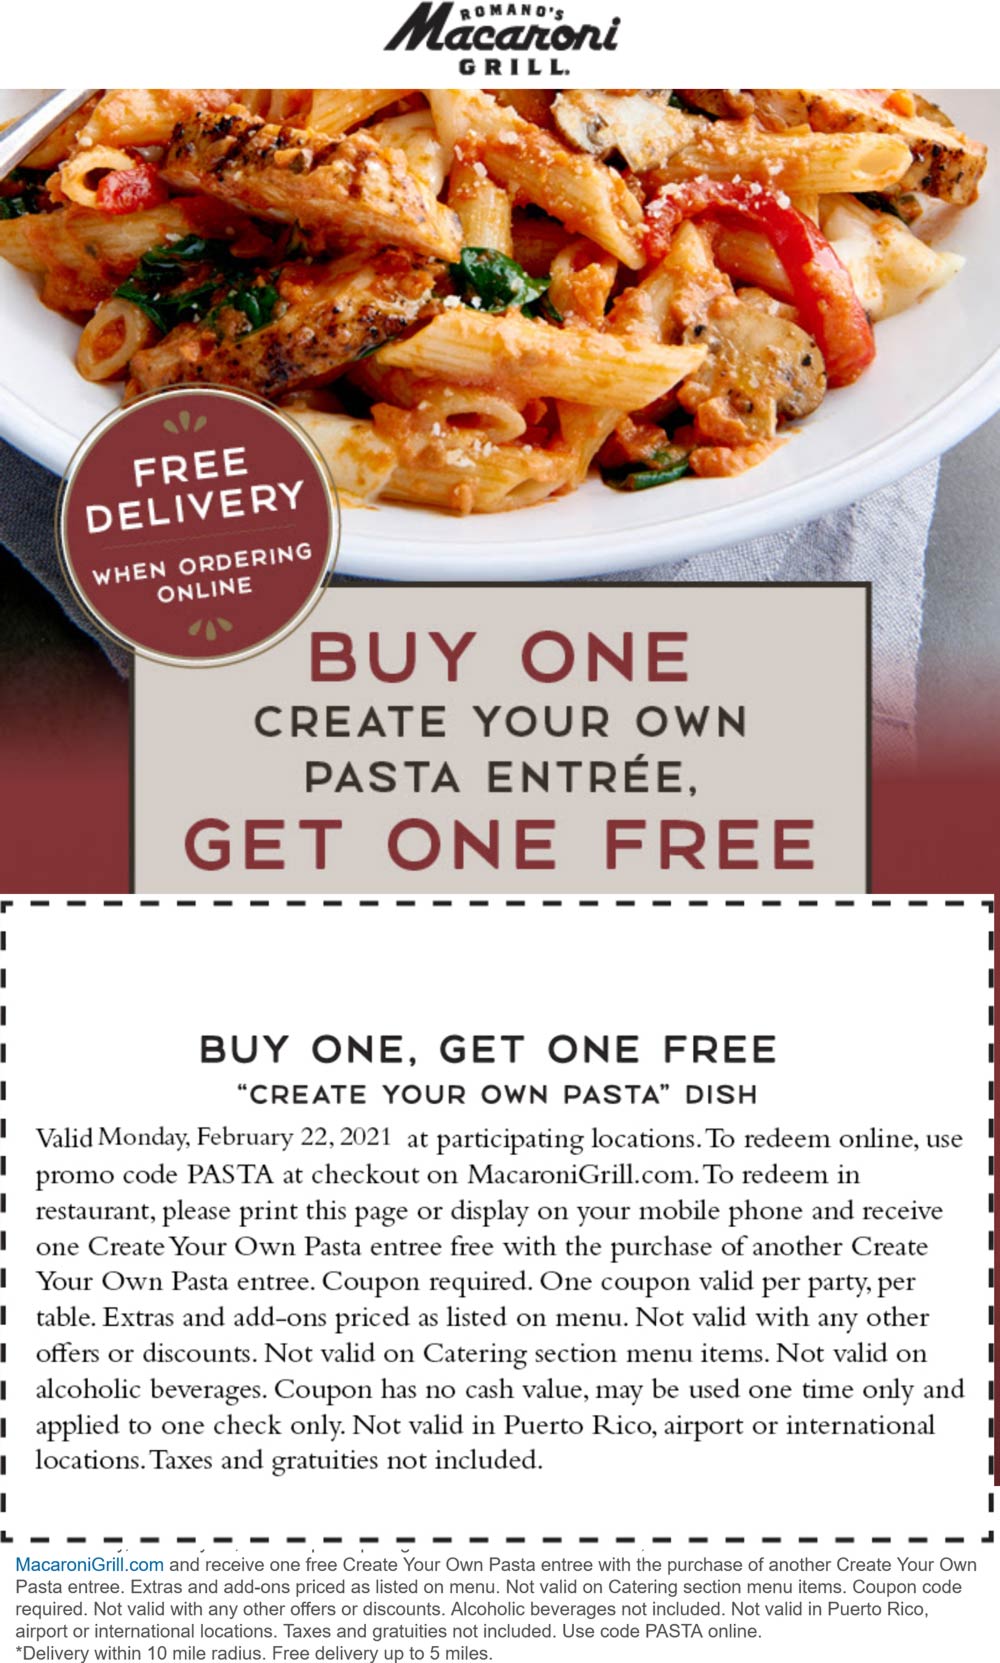 Macaroni Grill restaurants Coupon  Second pasta entree free today at Macaroni Grill via promo code PASTA #macaronigrill 